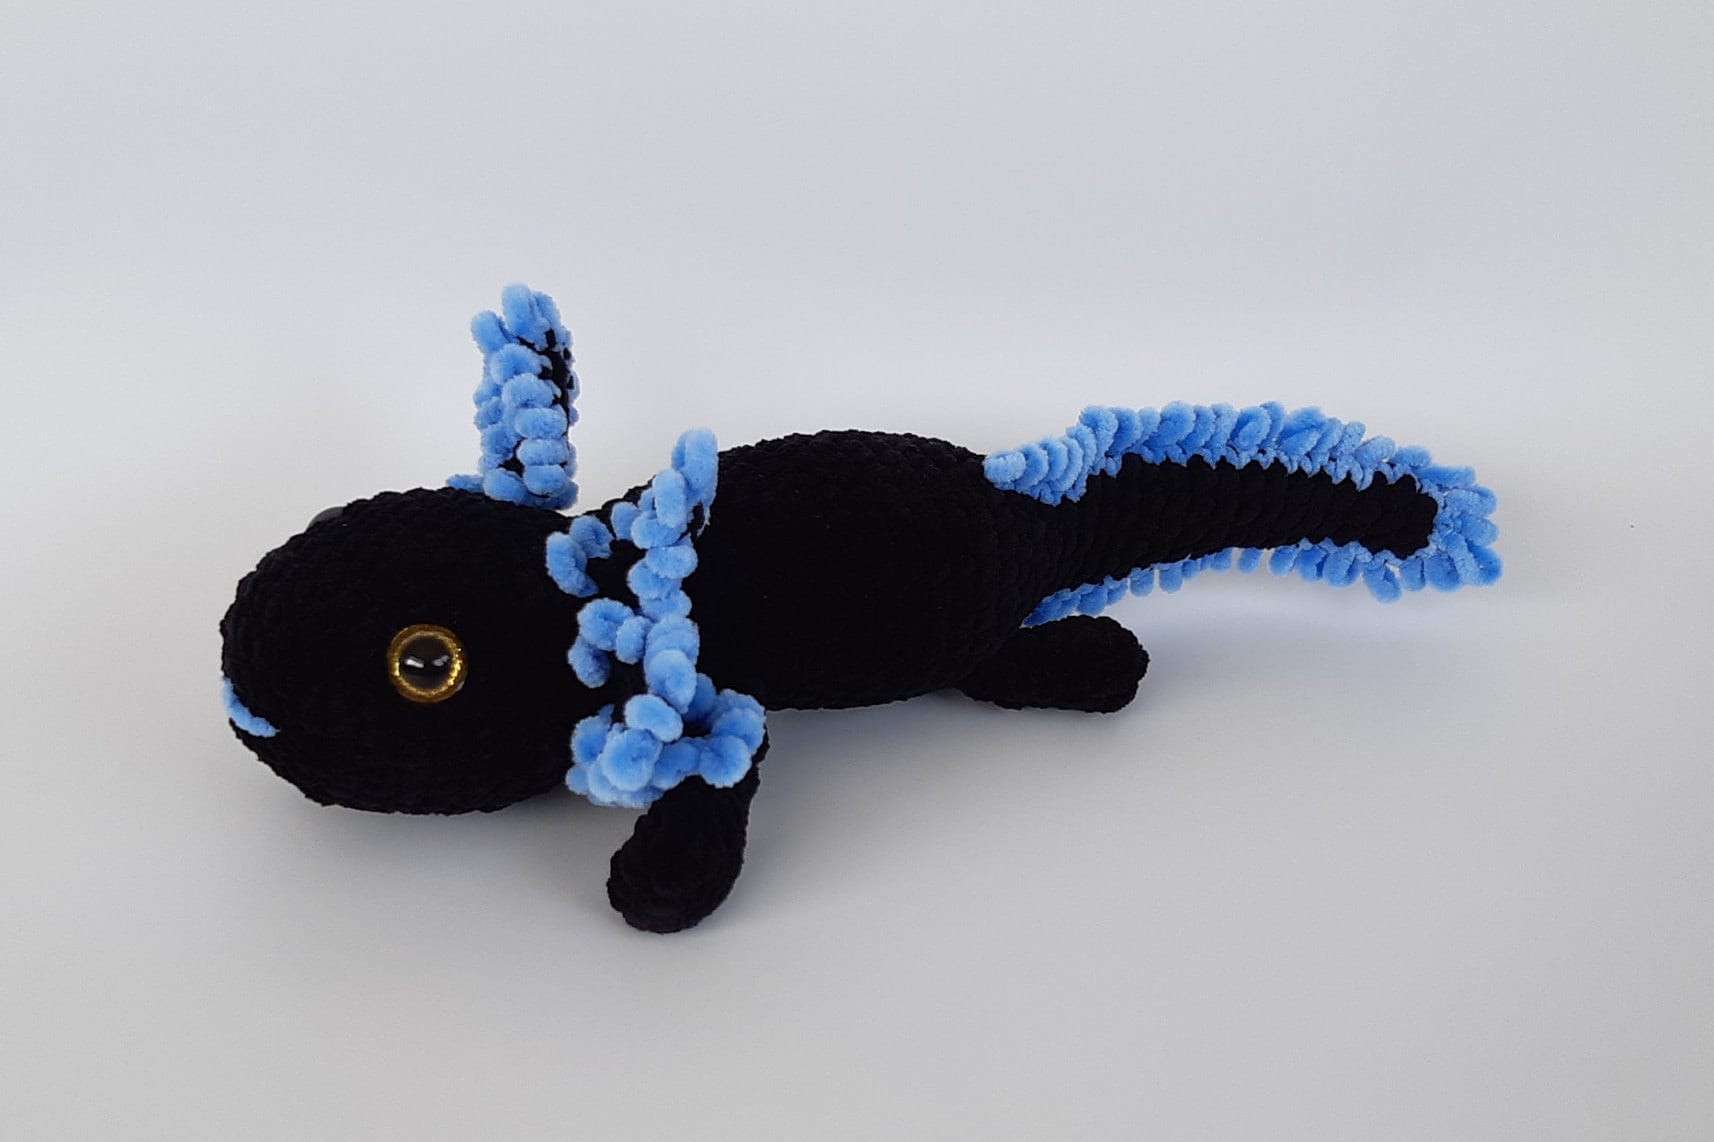  BlisteriArt Handmade Crochet Violet Axolotl Stuffed